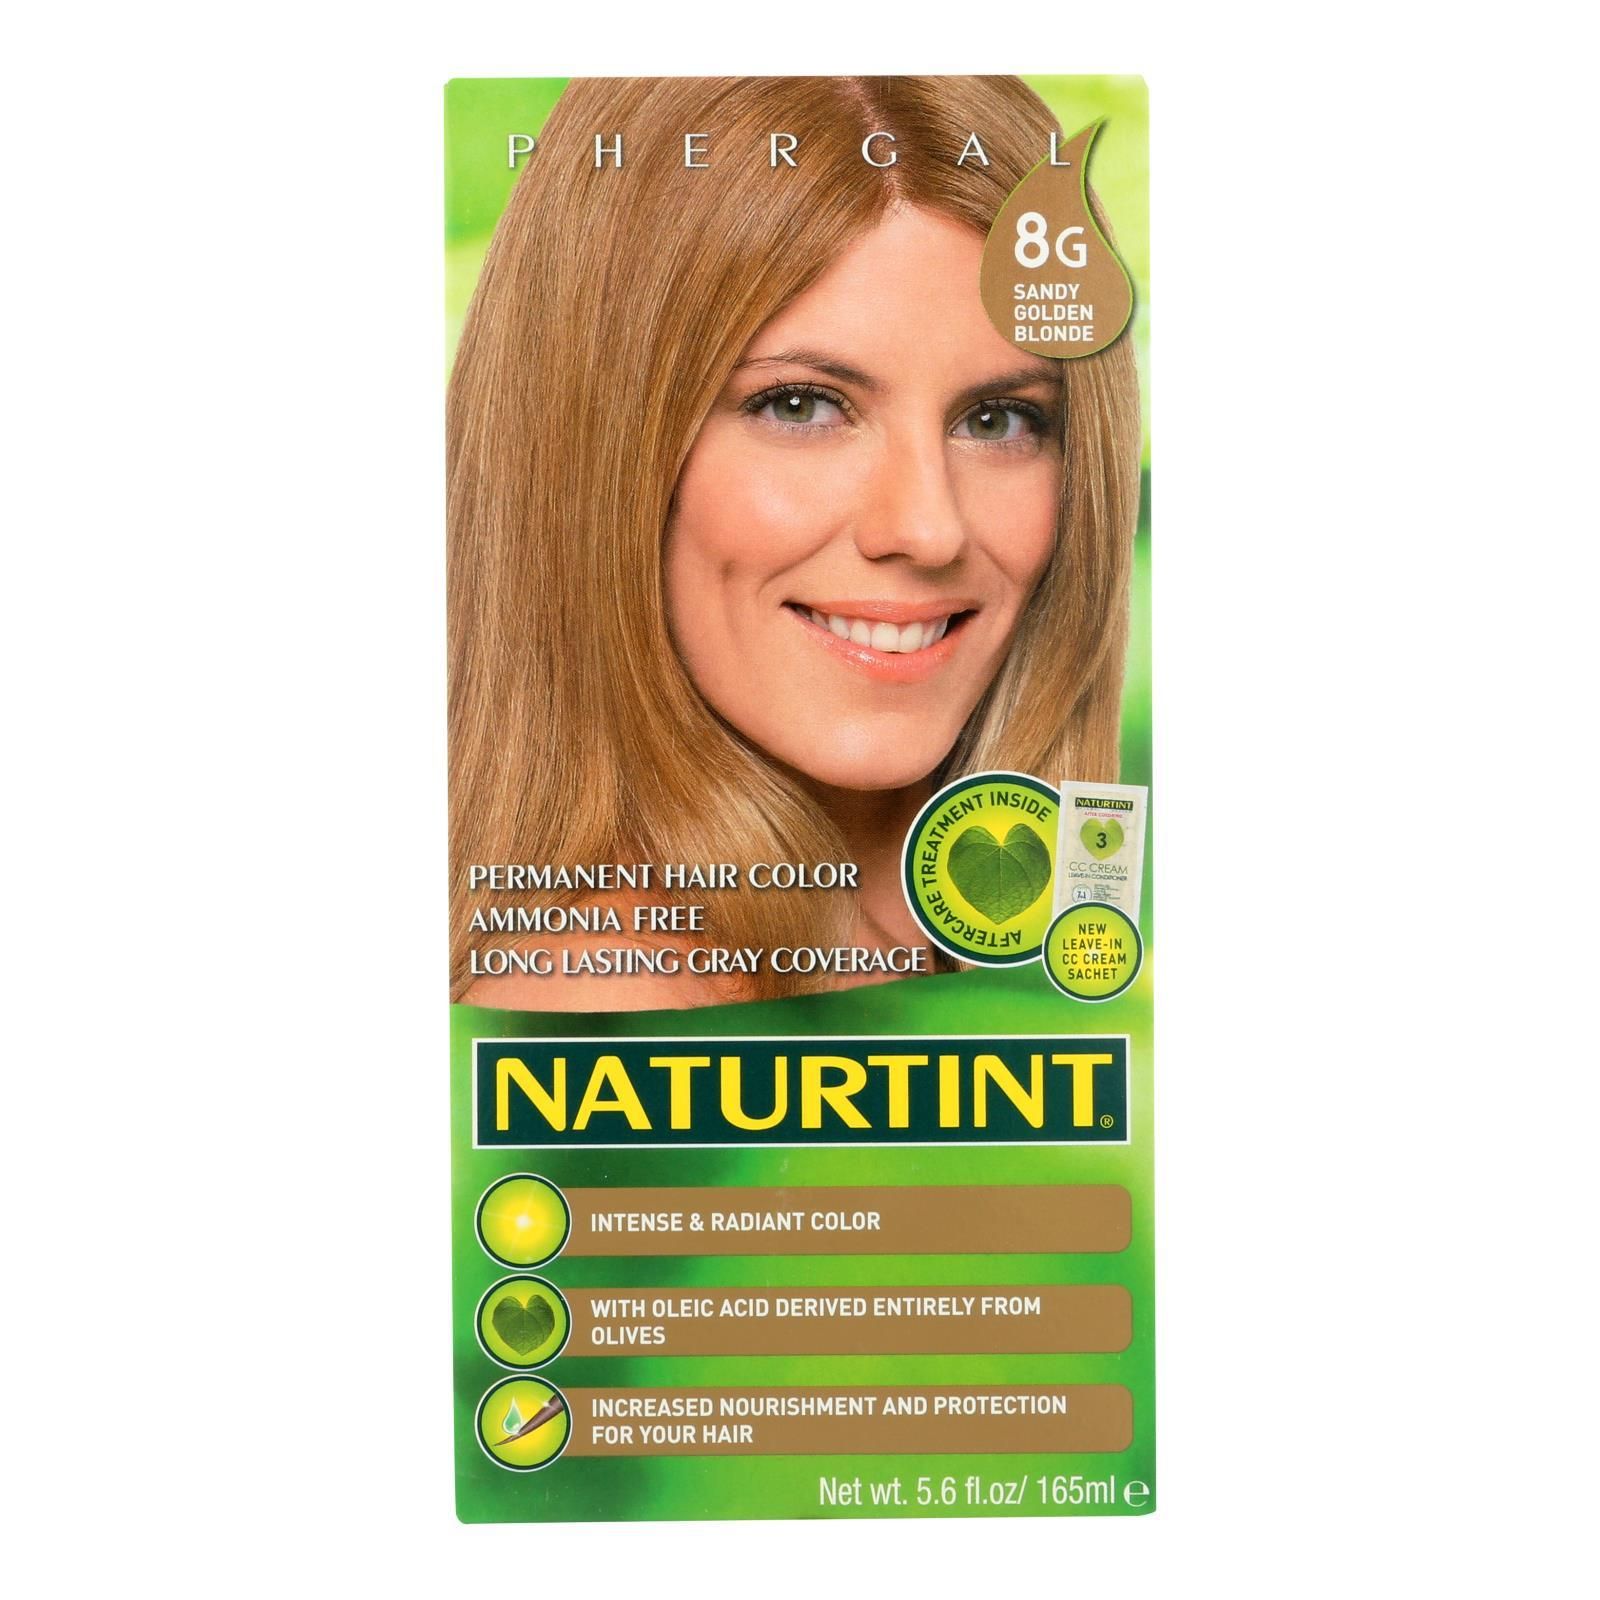 Naturtint Hair Color - Permanent - 8g - Sandy Golden Blonde  Oz -  Organic Basic Food